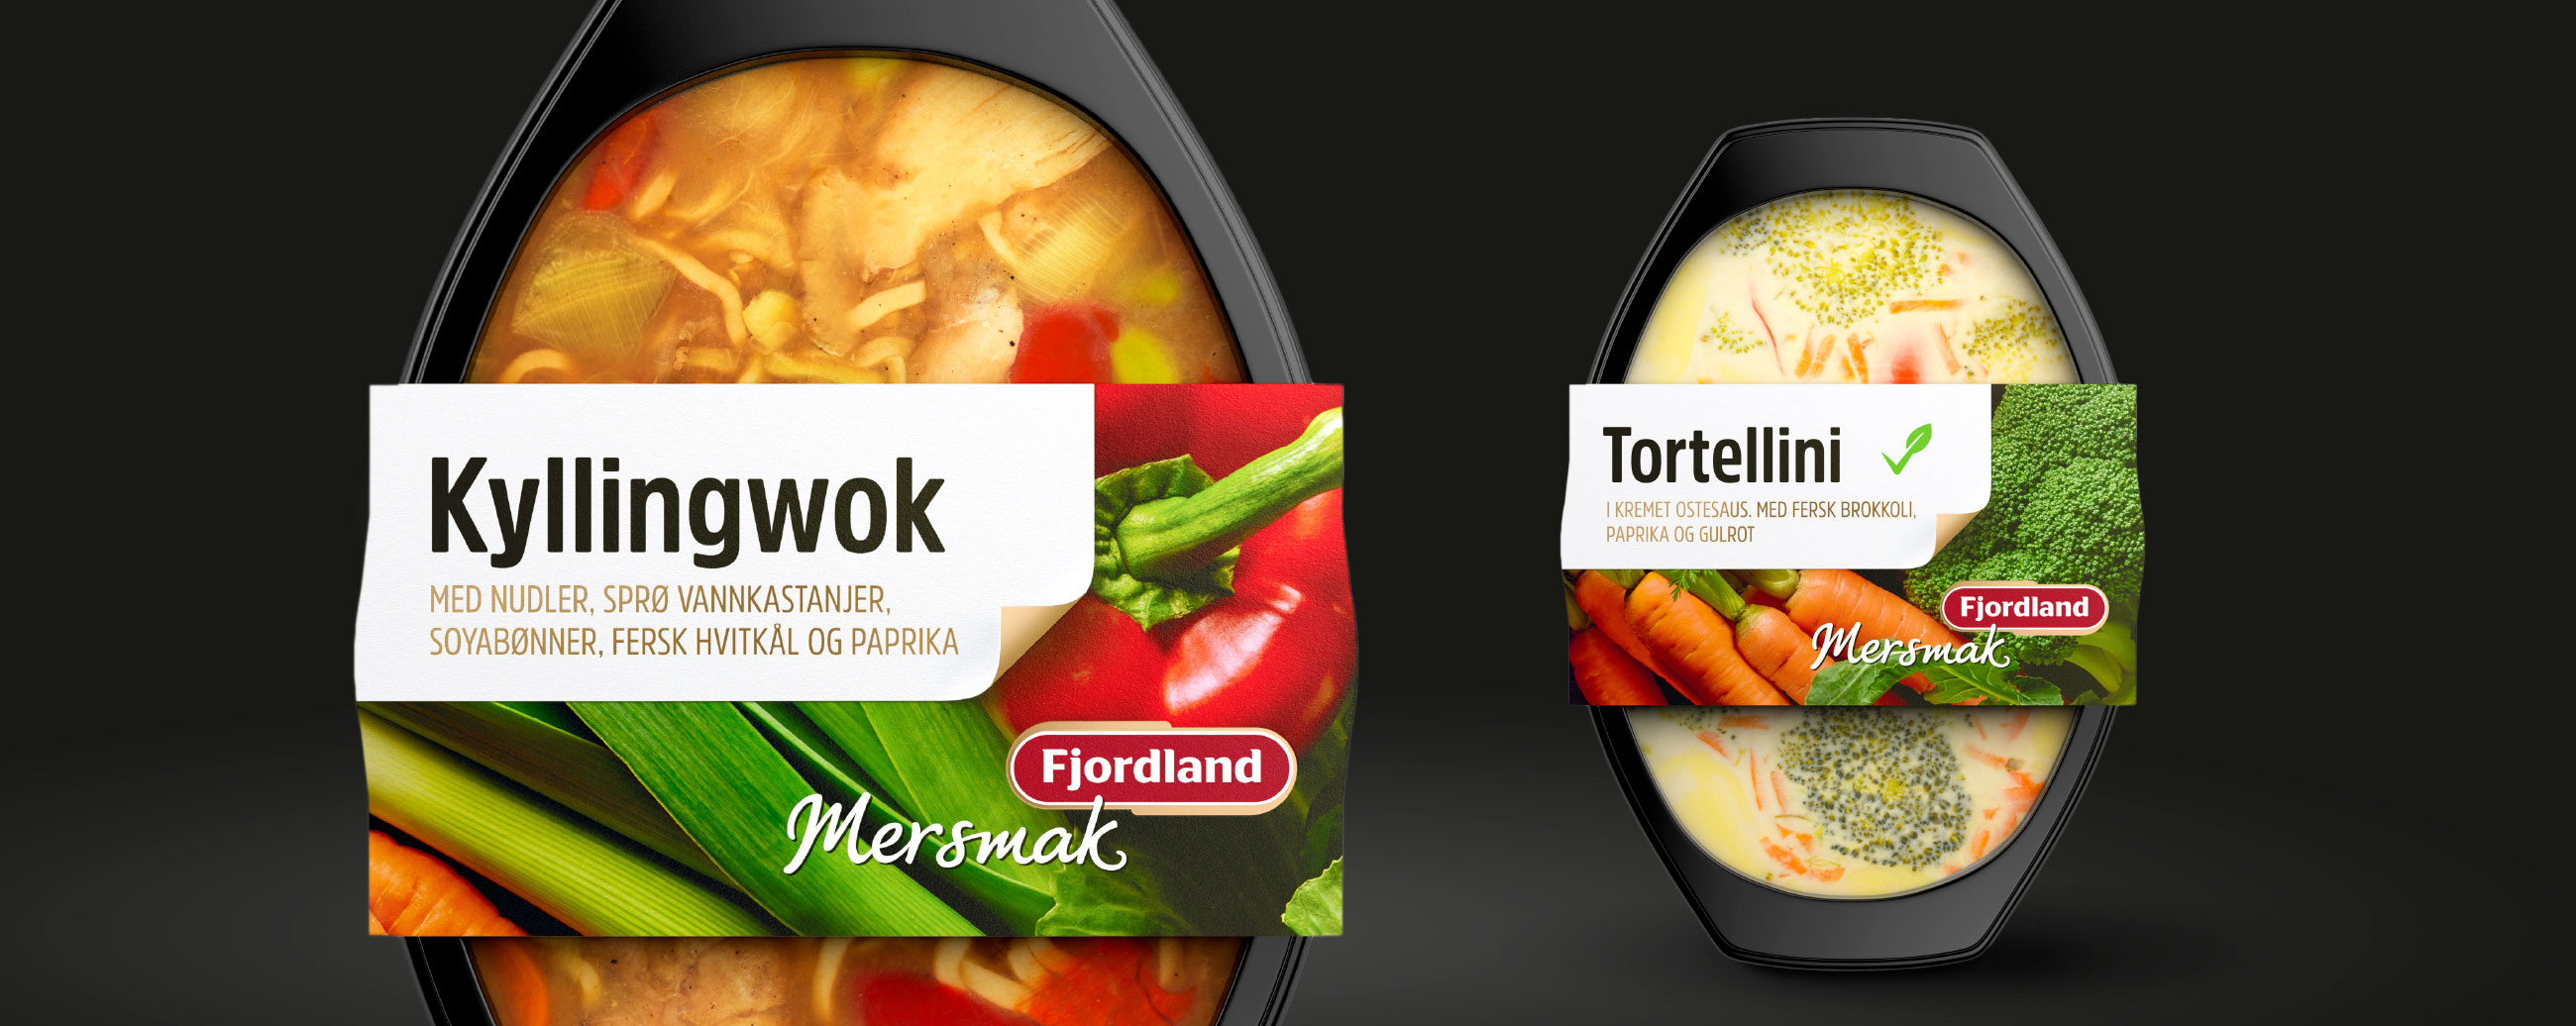 Fjordland Mersmak kyllingwok og tortellini. Emballasje packaging design.